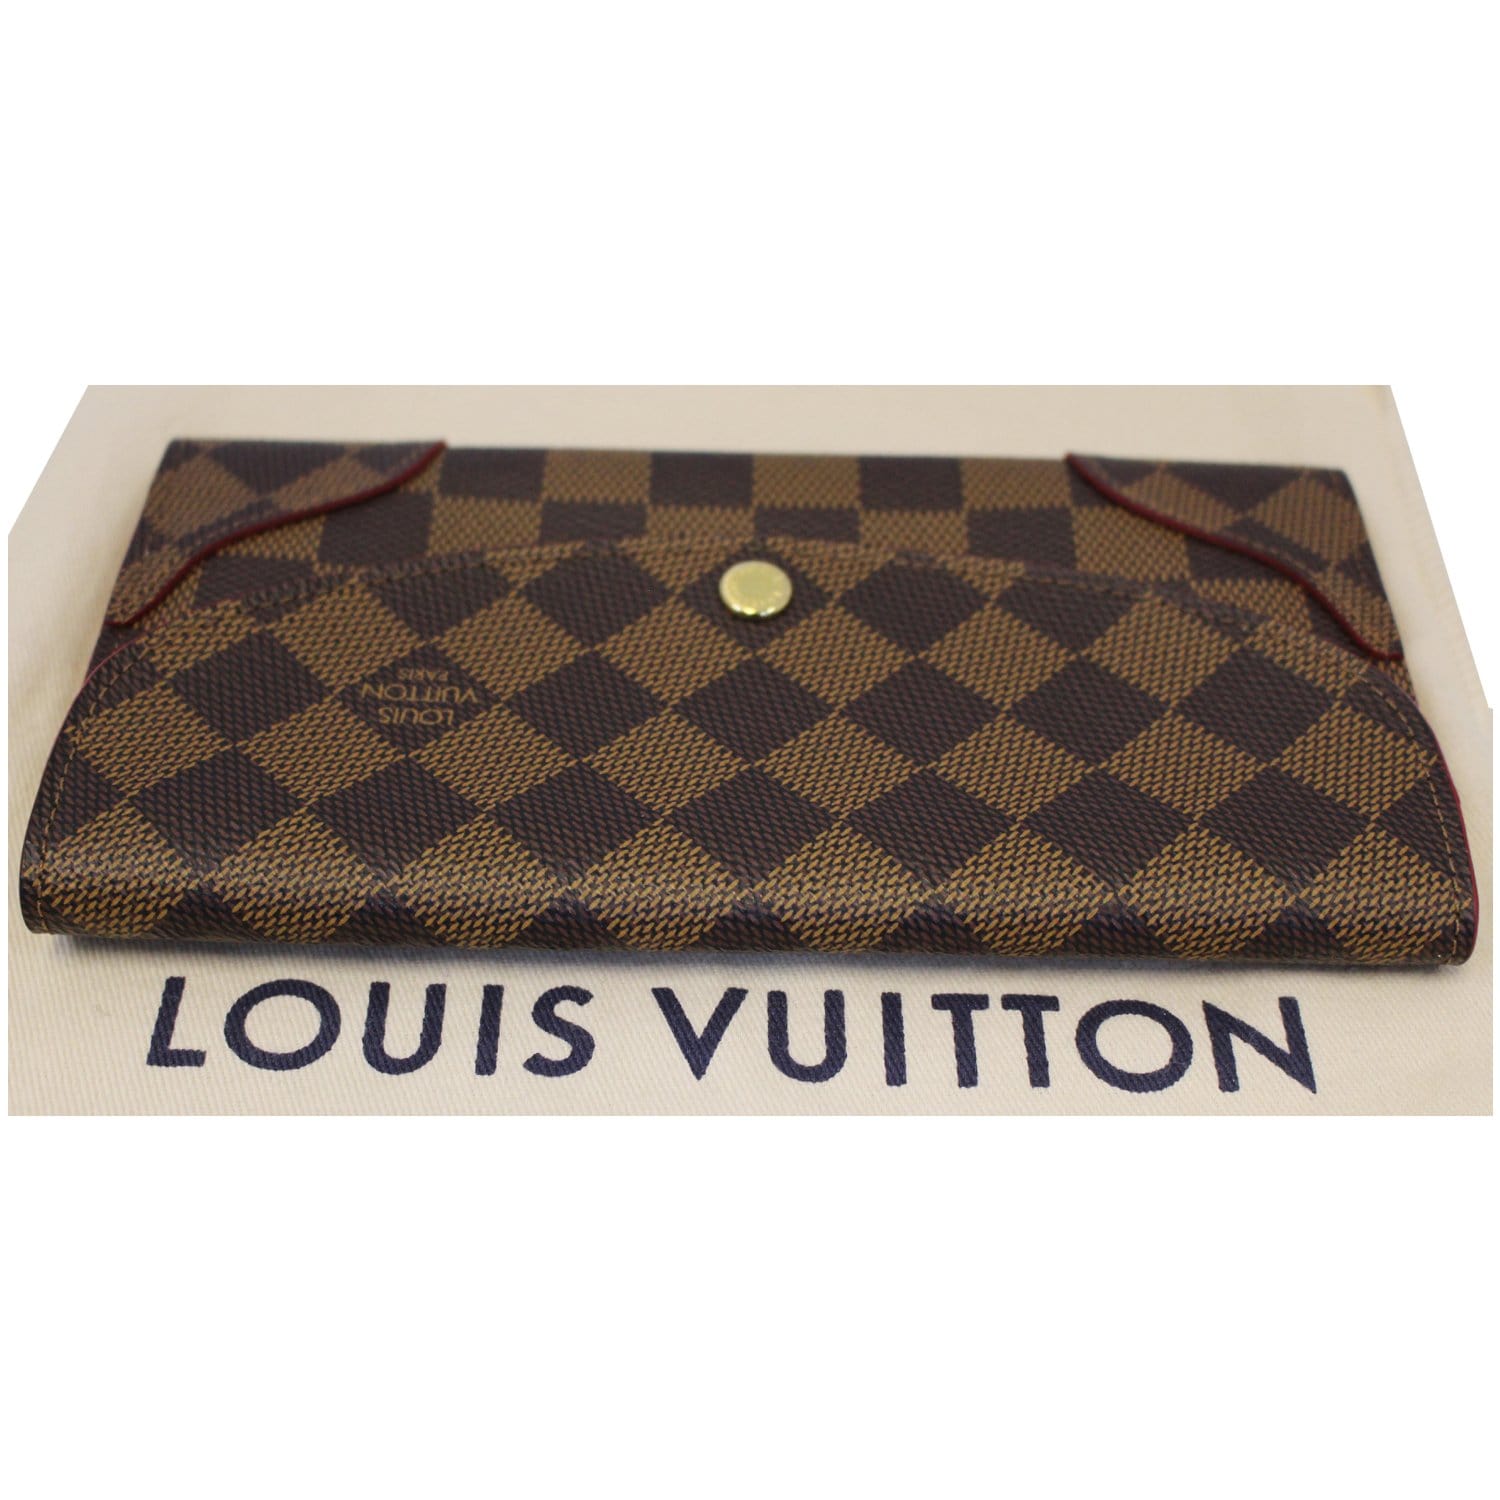 Louis Vuitton 2016 Damier Ebene Pattern Caïssa Wallet